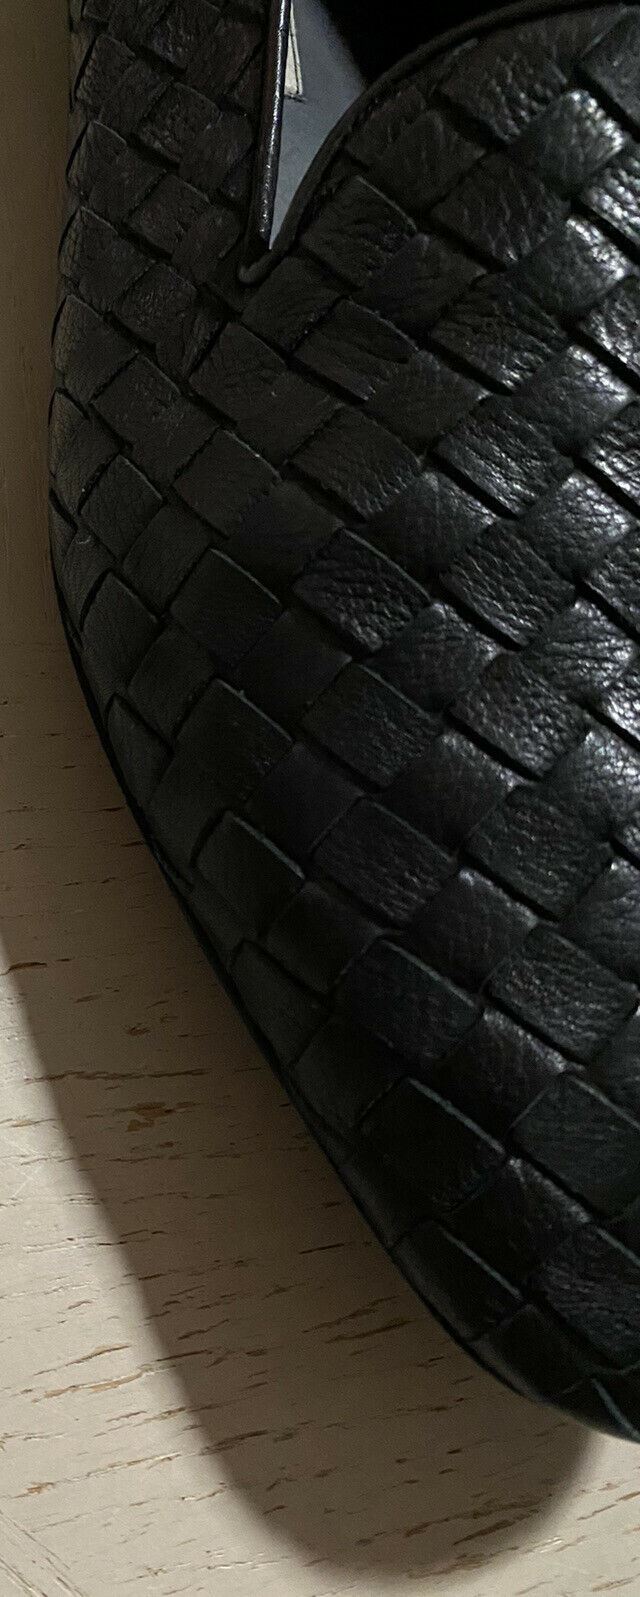 NIB $810 Bottega Veneta Men Leather Loafers Shoes Black 7 US/40 Eu Italy